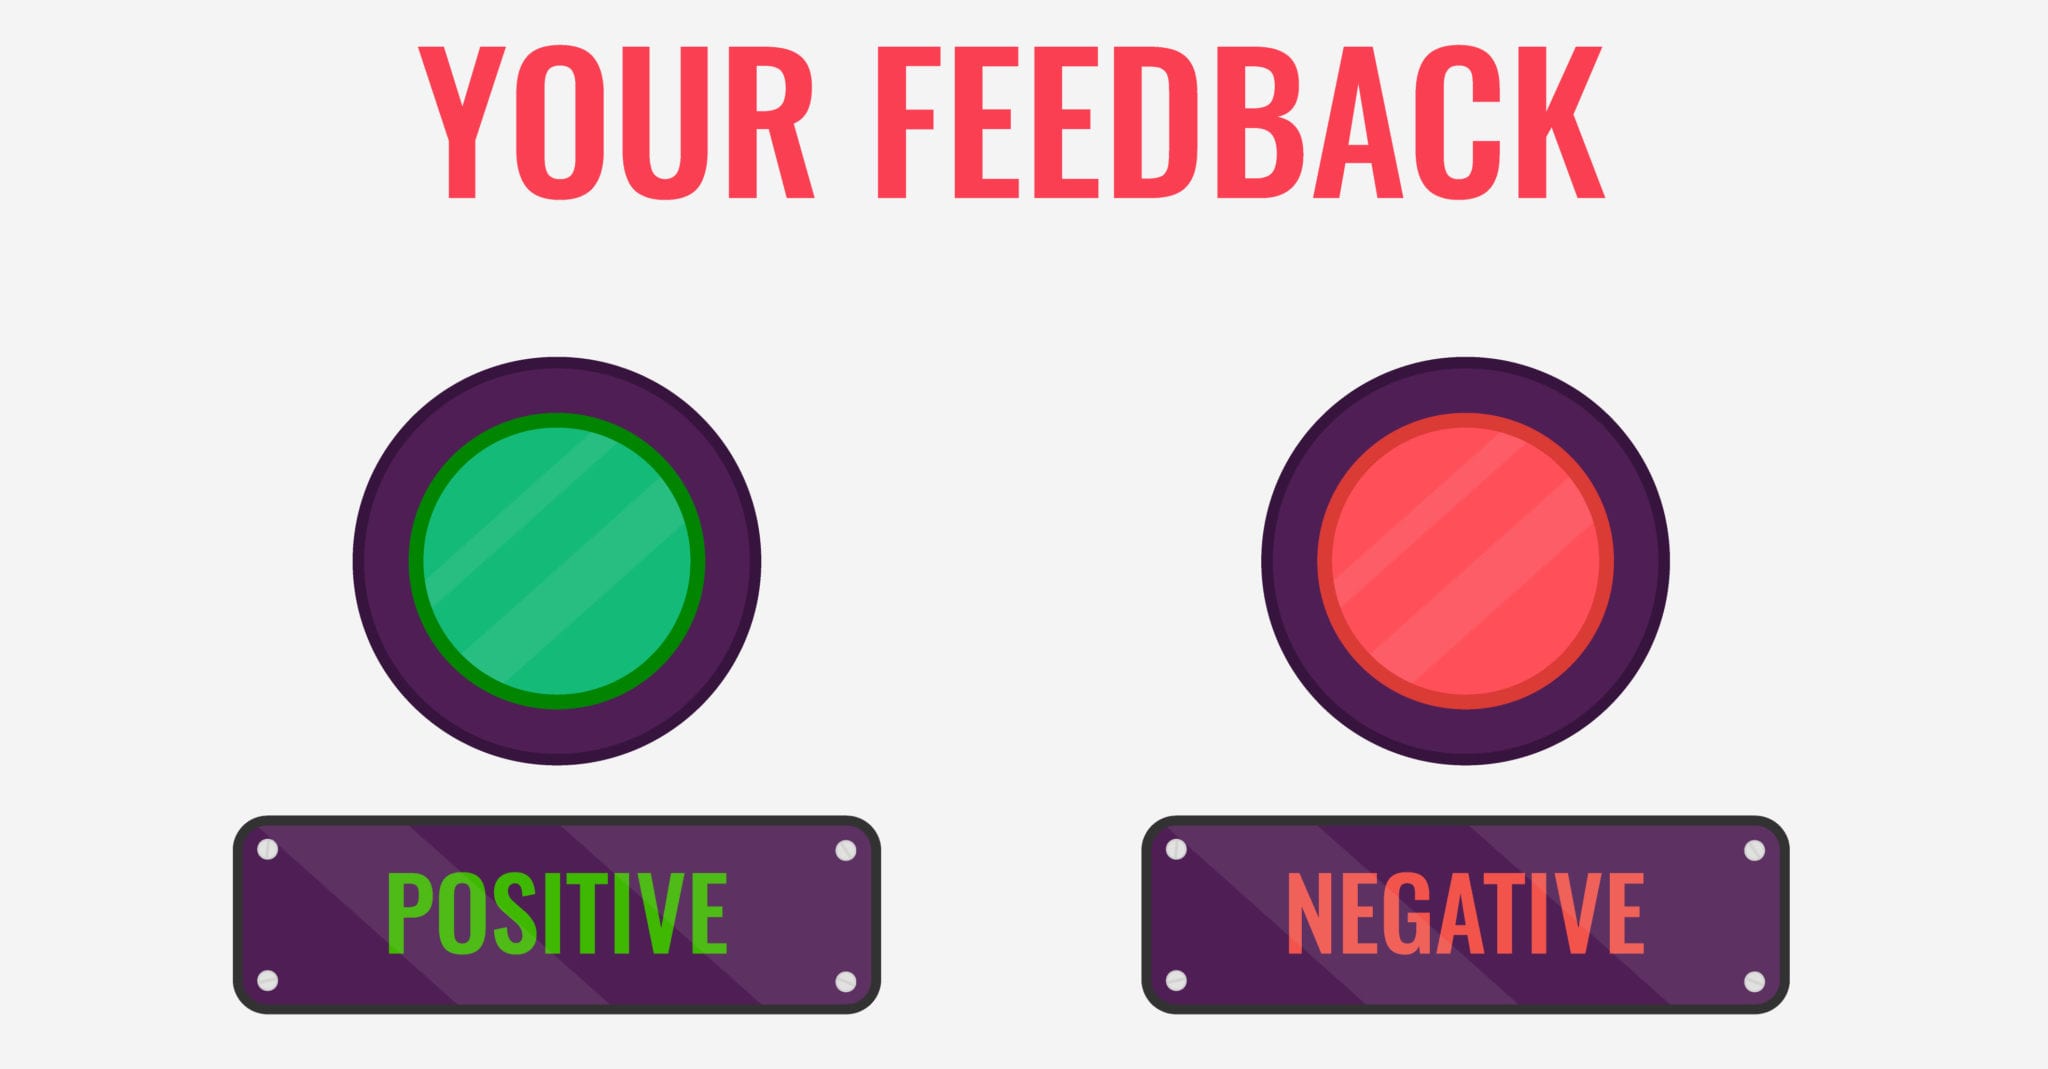 10 Steps for Handling Negative Reviews